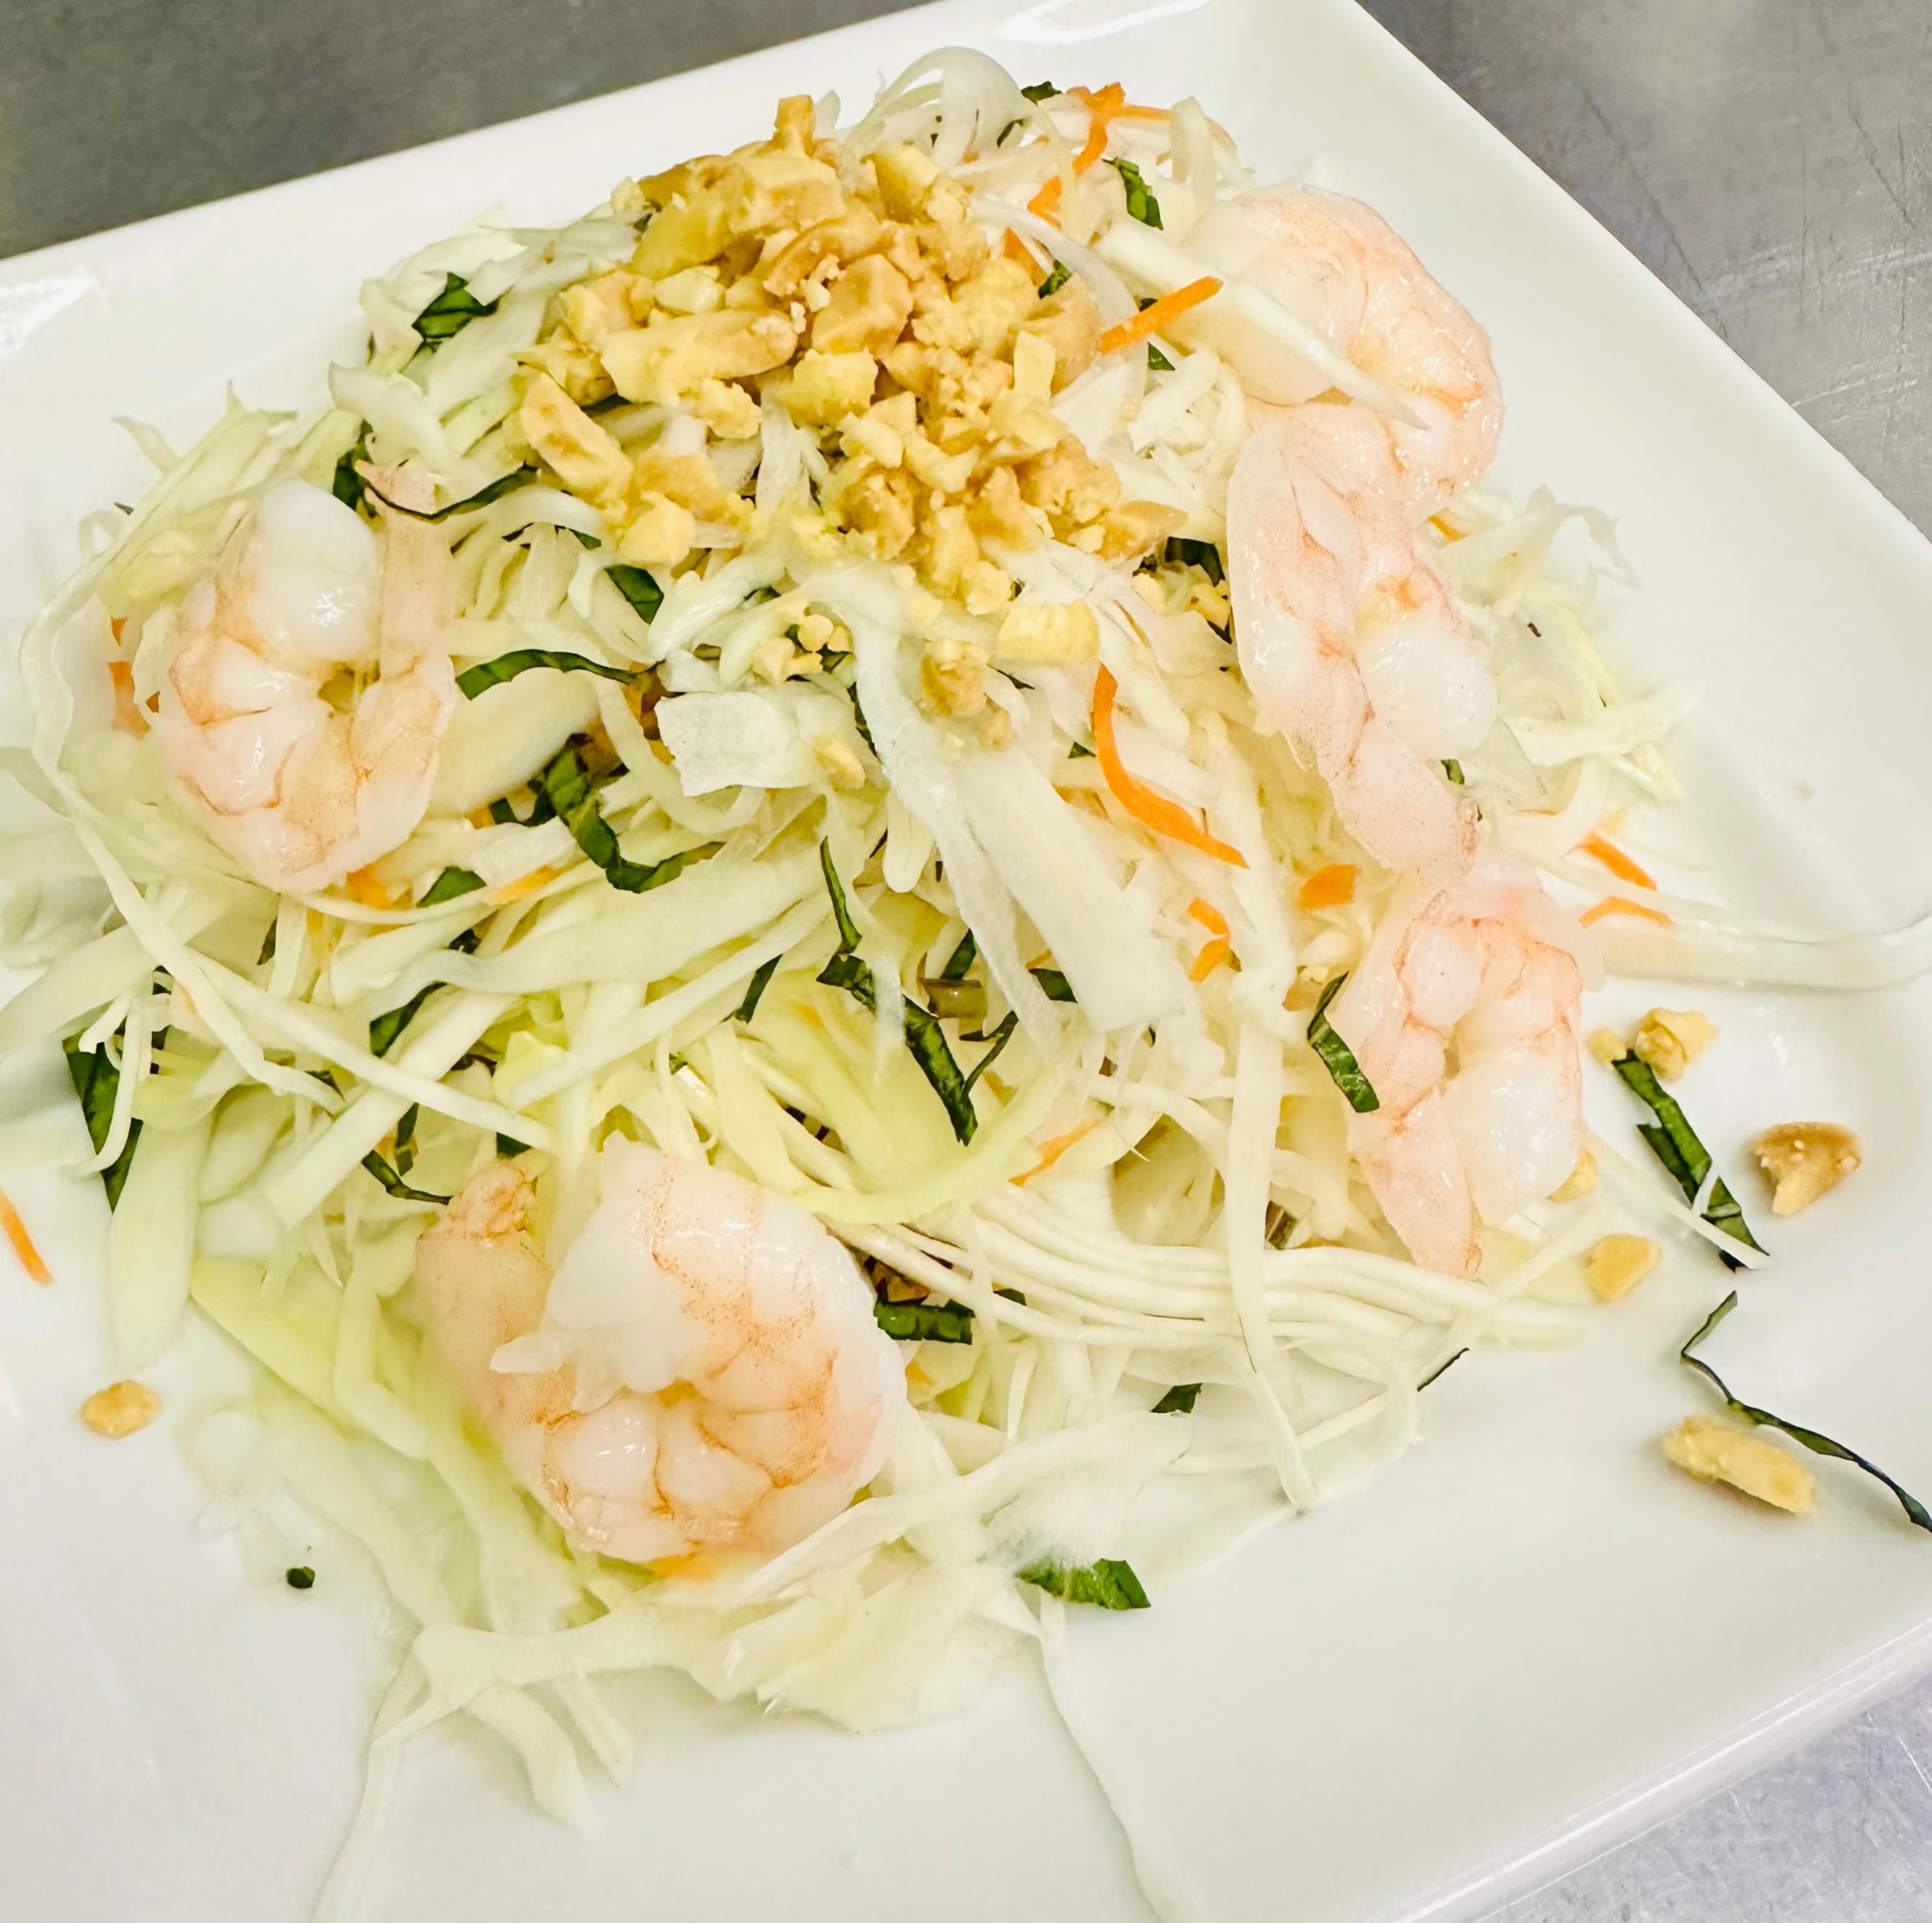 6.  Shrimp Salad